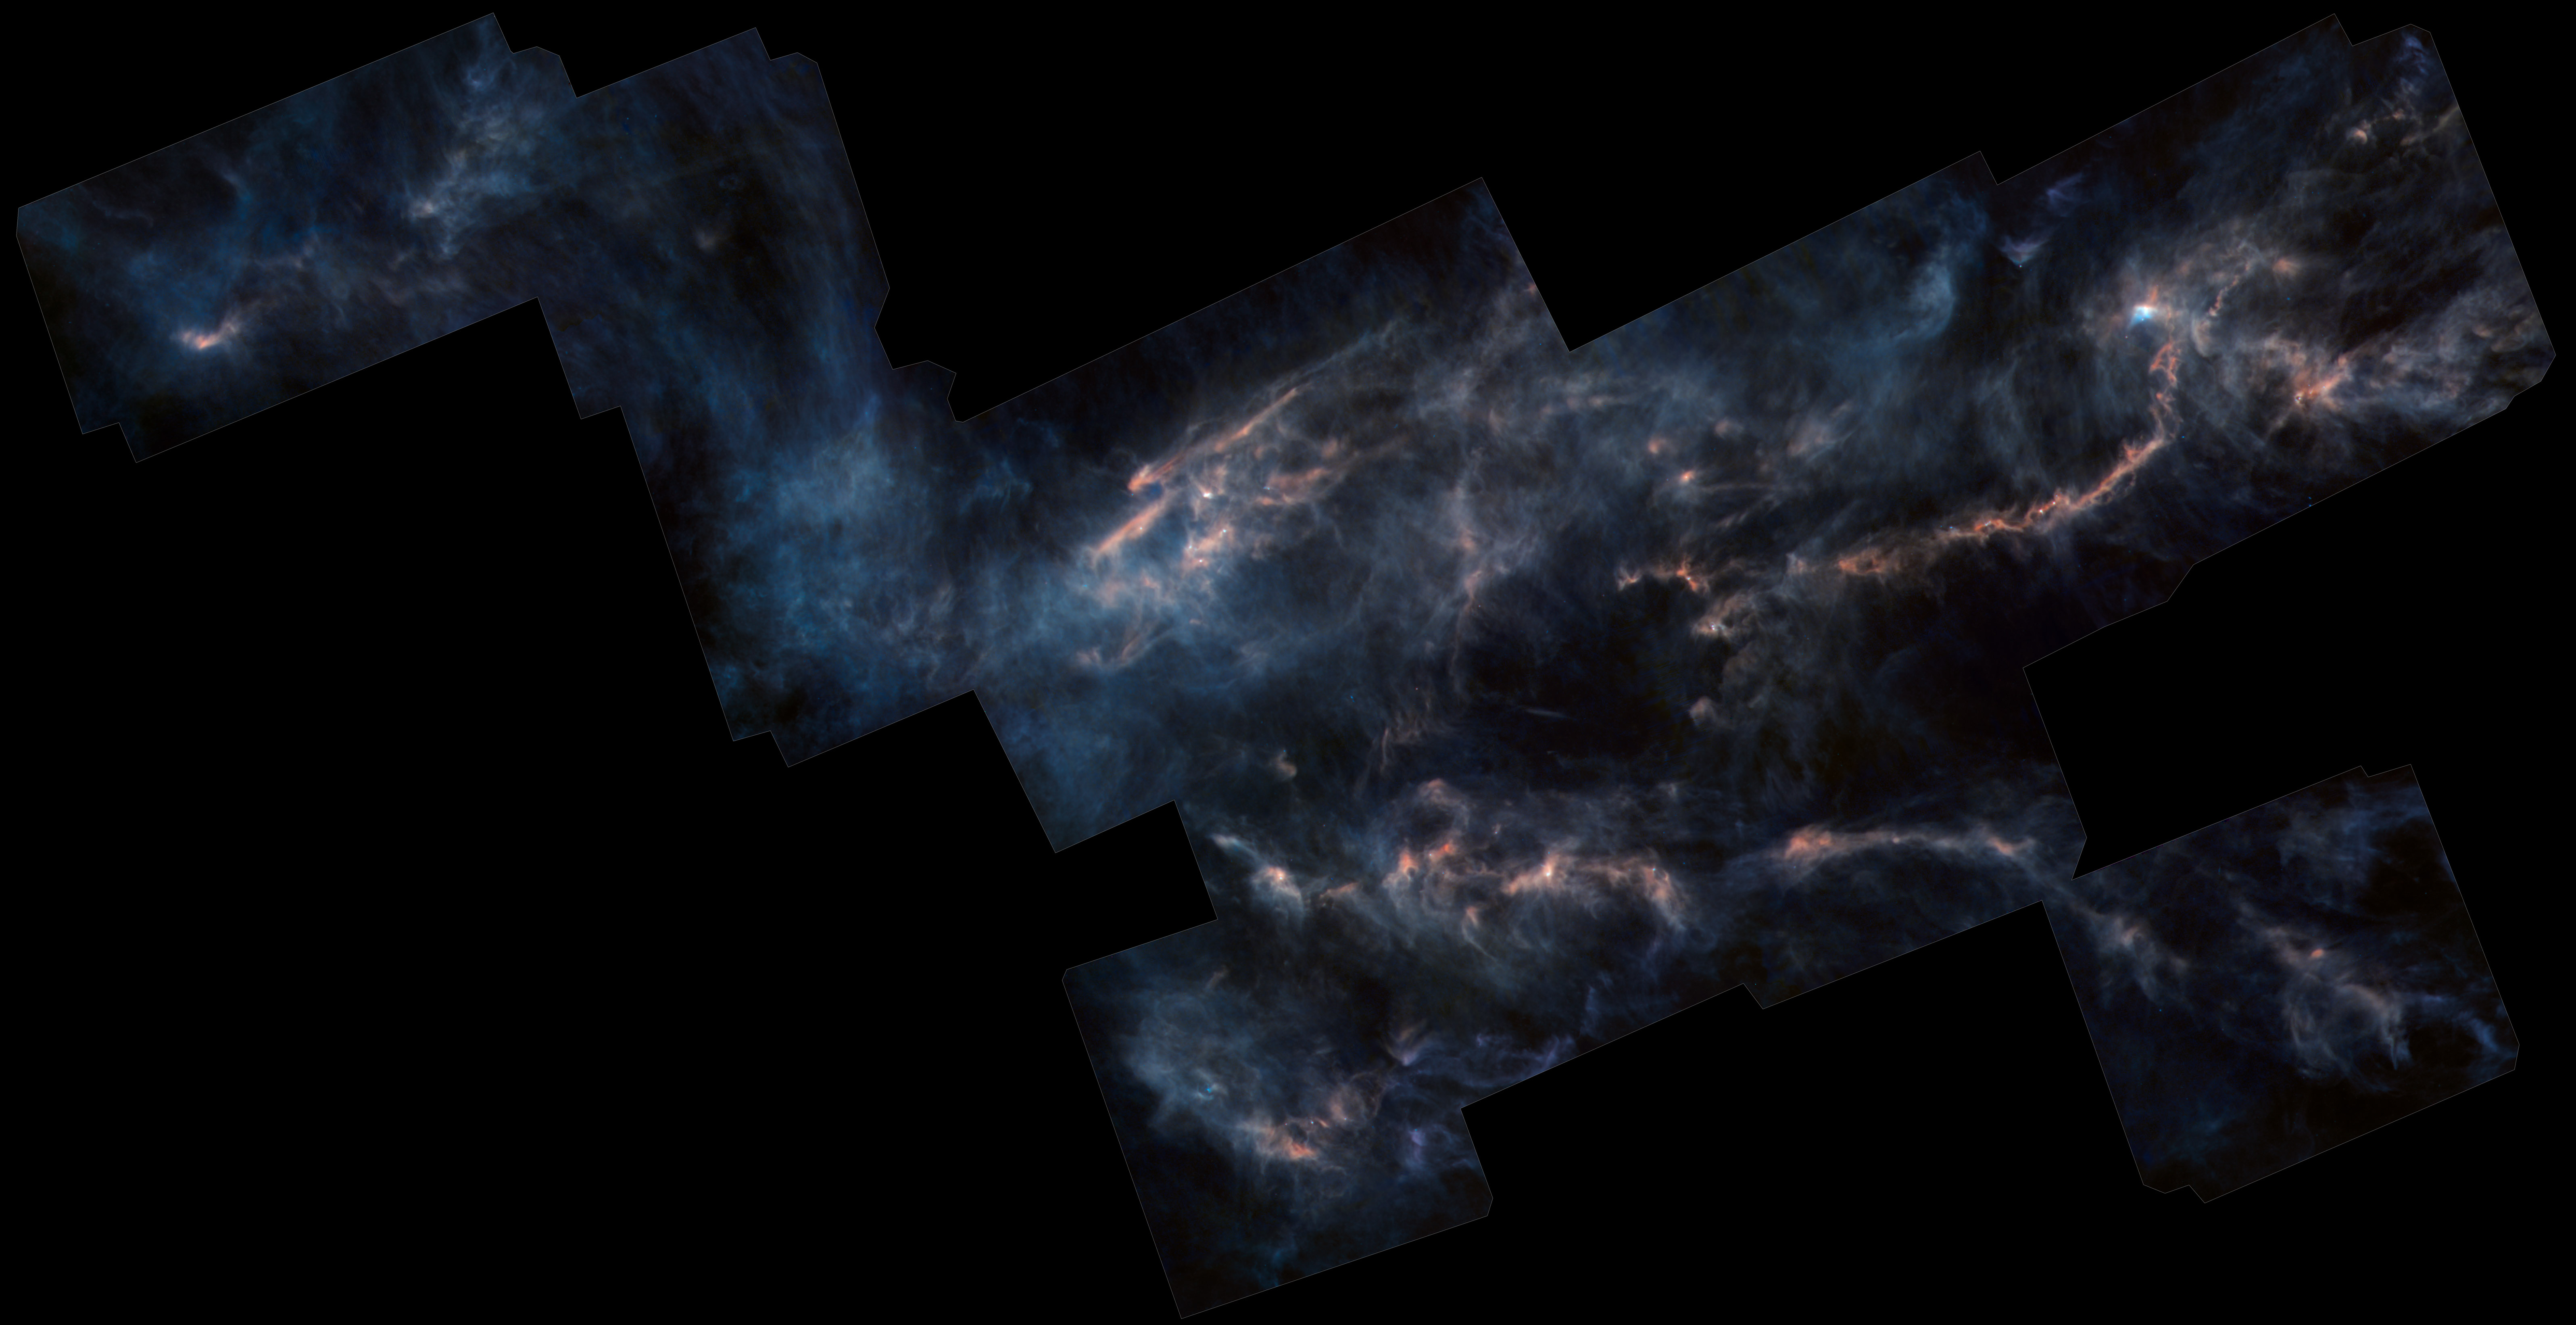 <span style="font-size:16px;position:relative;top:-50px">[ESA/Herschel/NASA/JPL-Caltech; acknowledgement: R. Hurt (JPL-Caltech)](http://www.esa.int/spaceinimages/Images/2017/09/Herschel_s_view_of_the_Taurus_molecular_cloud)</span>